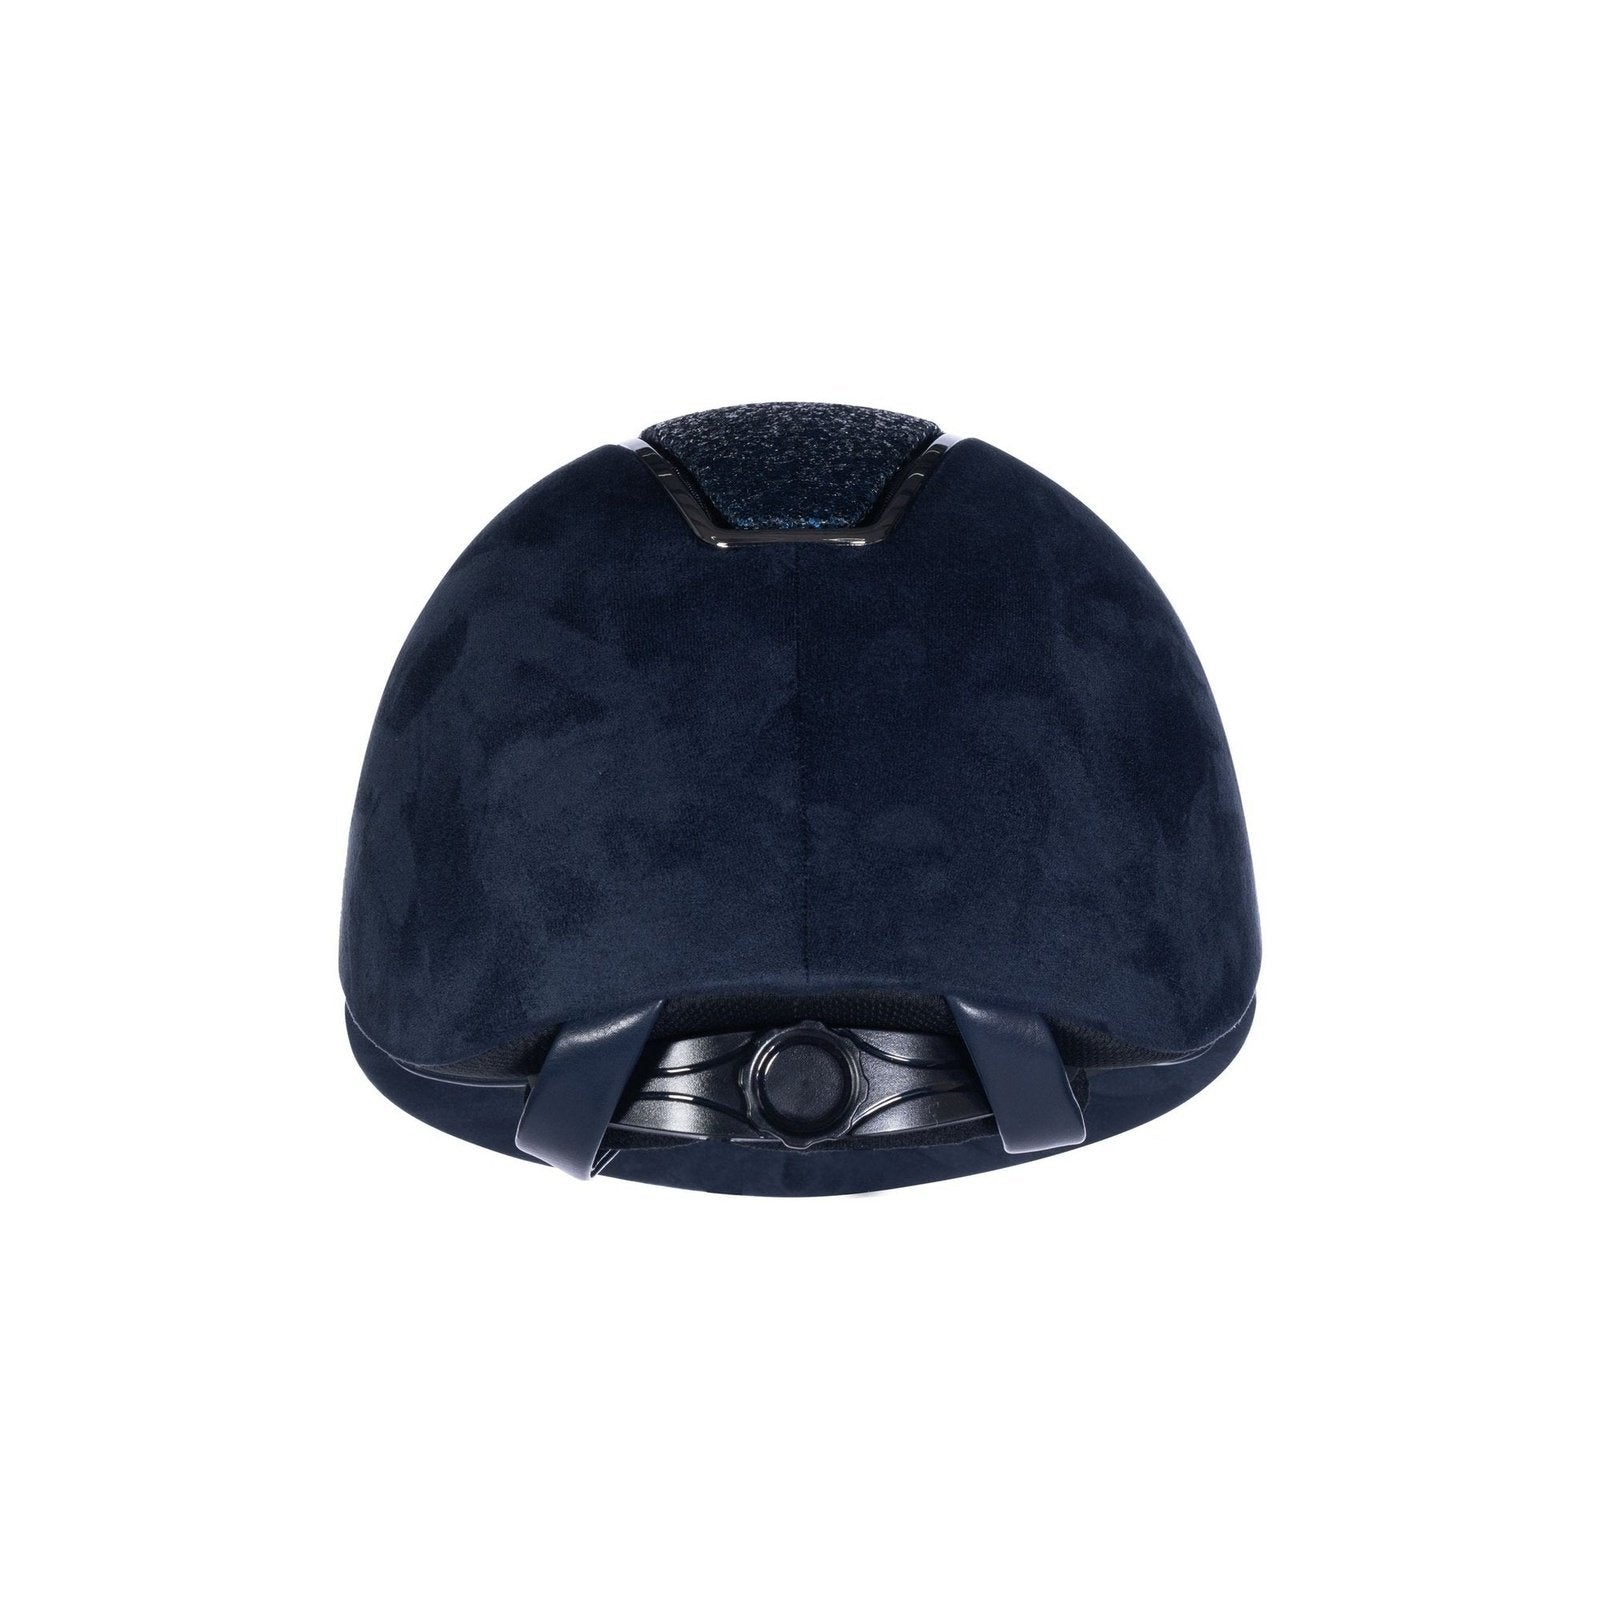 Reithelm -Lady Shield Sparkle Velours- in blau & schwarz HKM bei SP-Reitsport